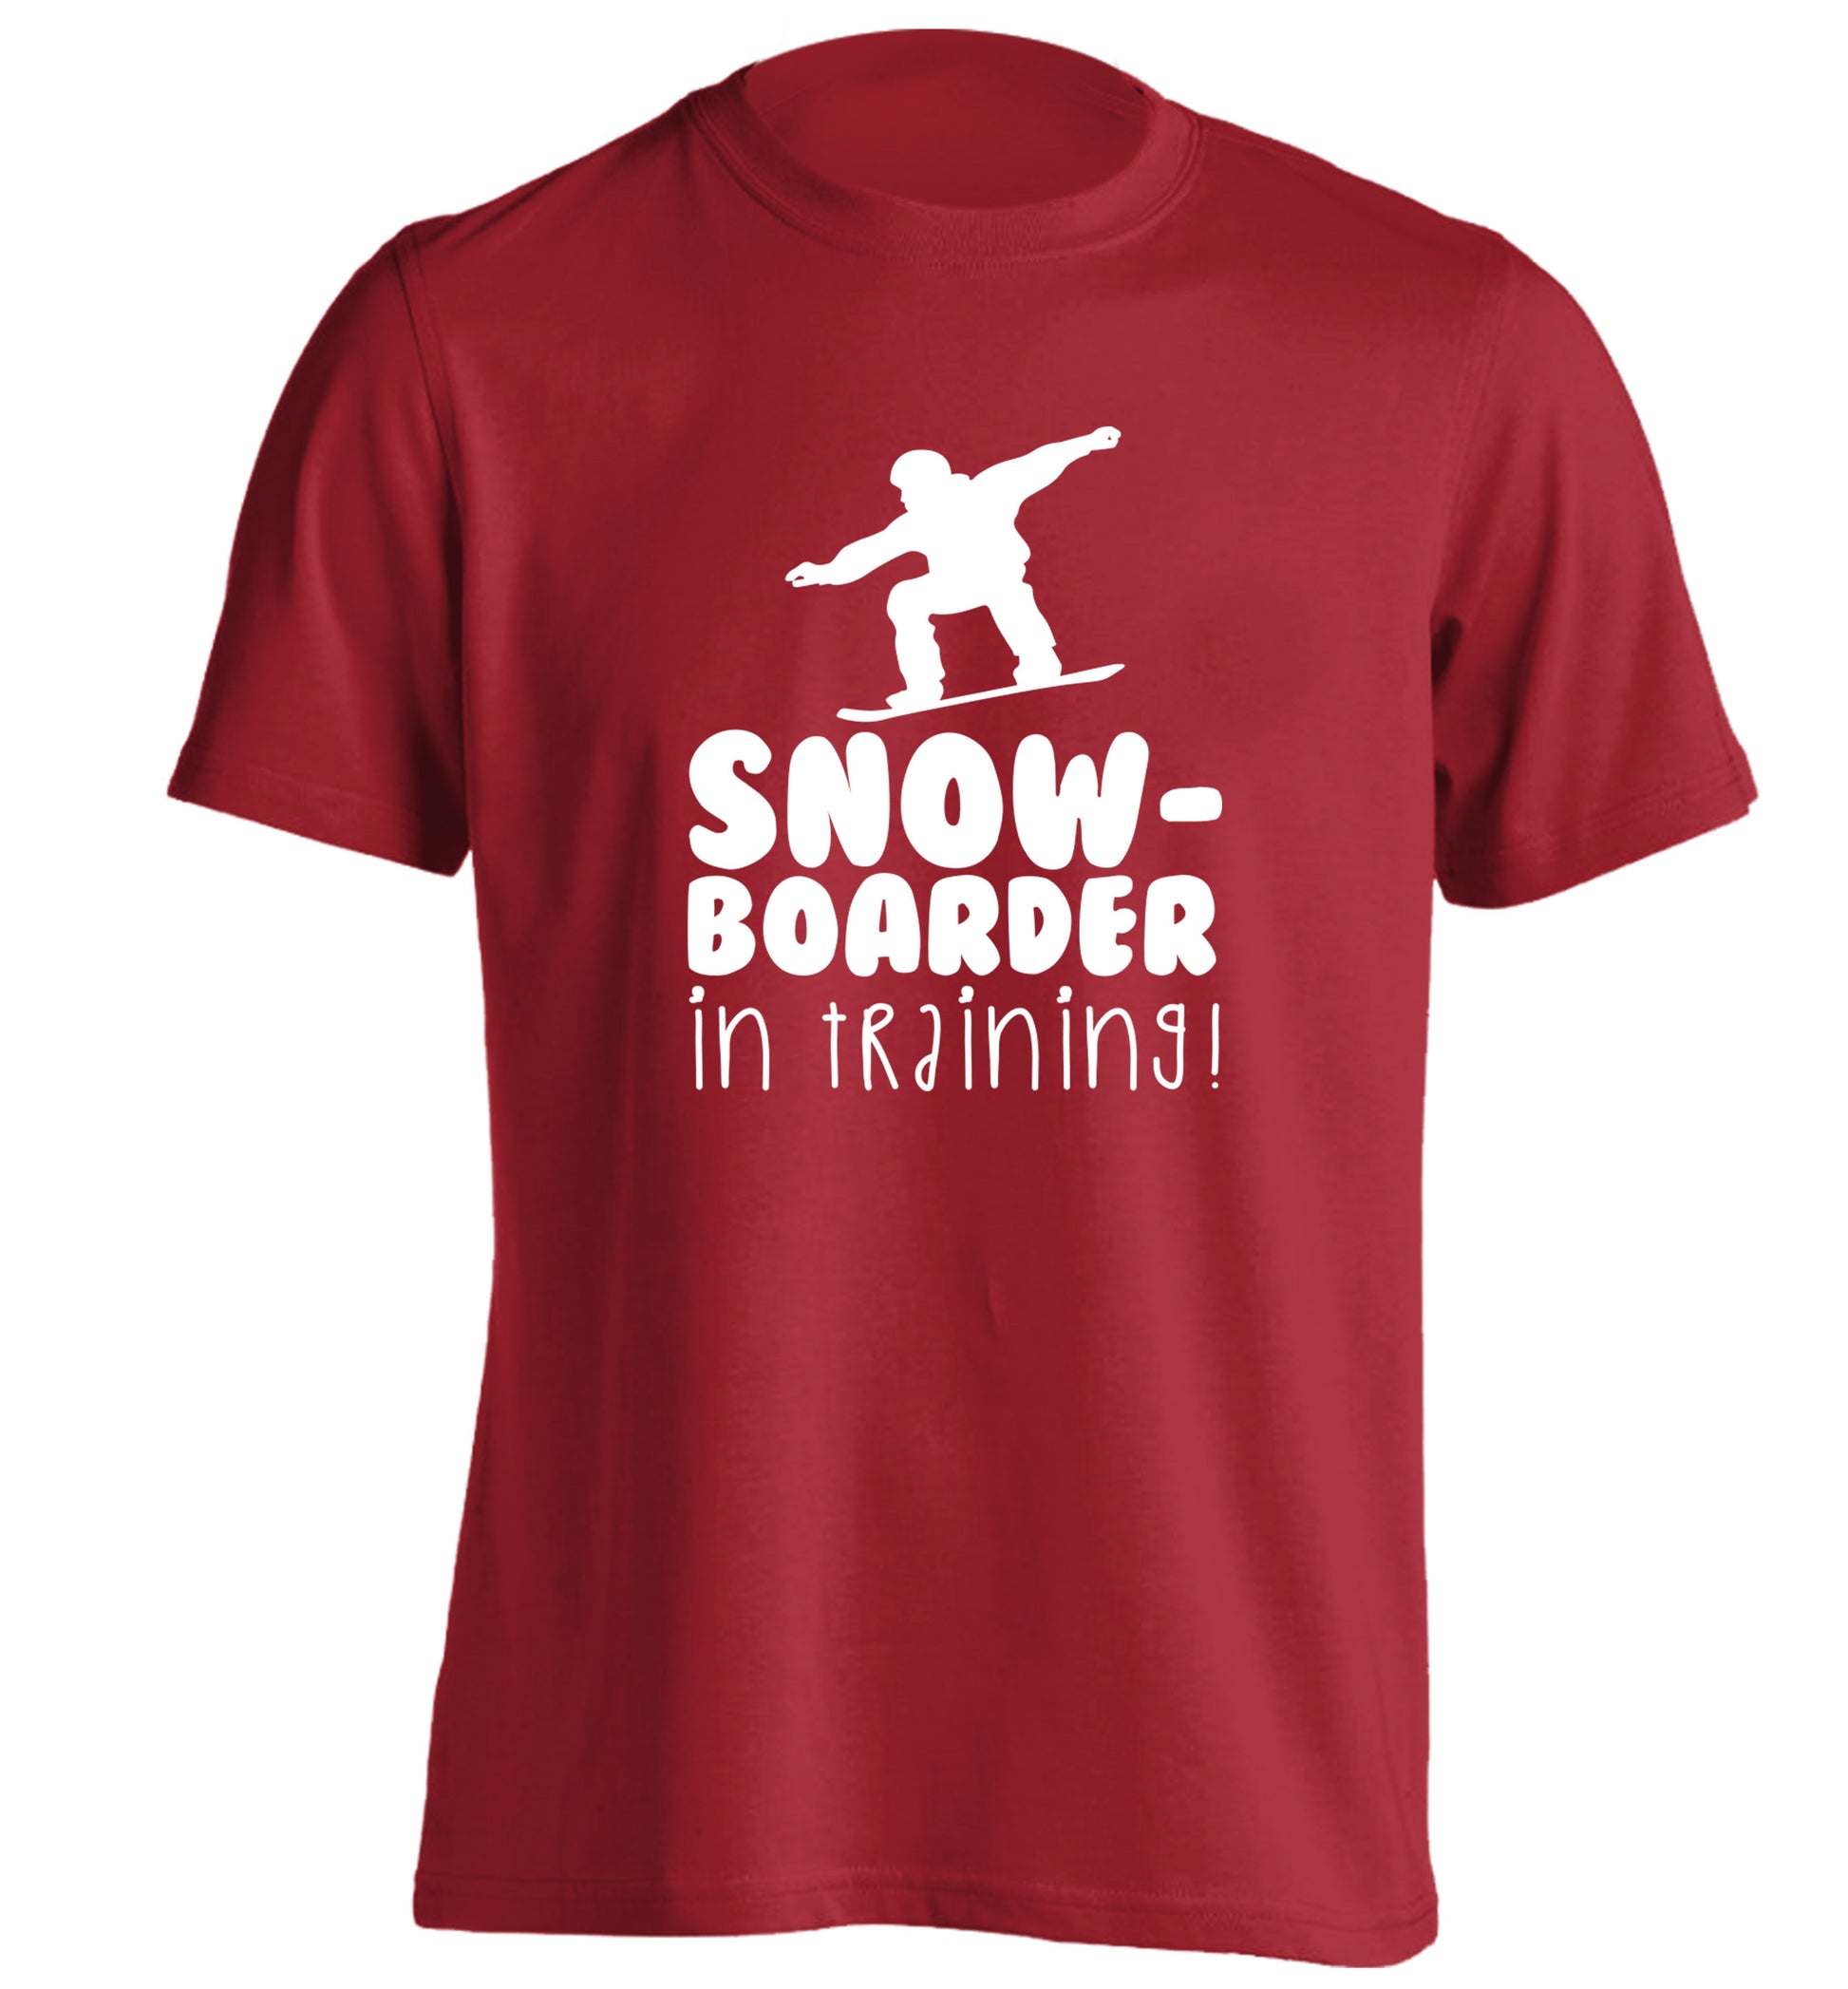 Snowboarder in training adults unisex red Tshirt 2XL